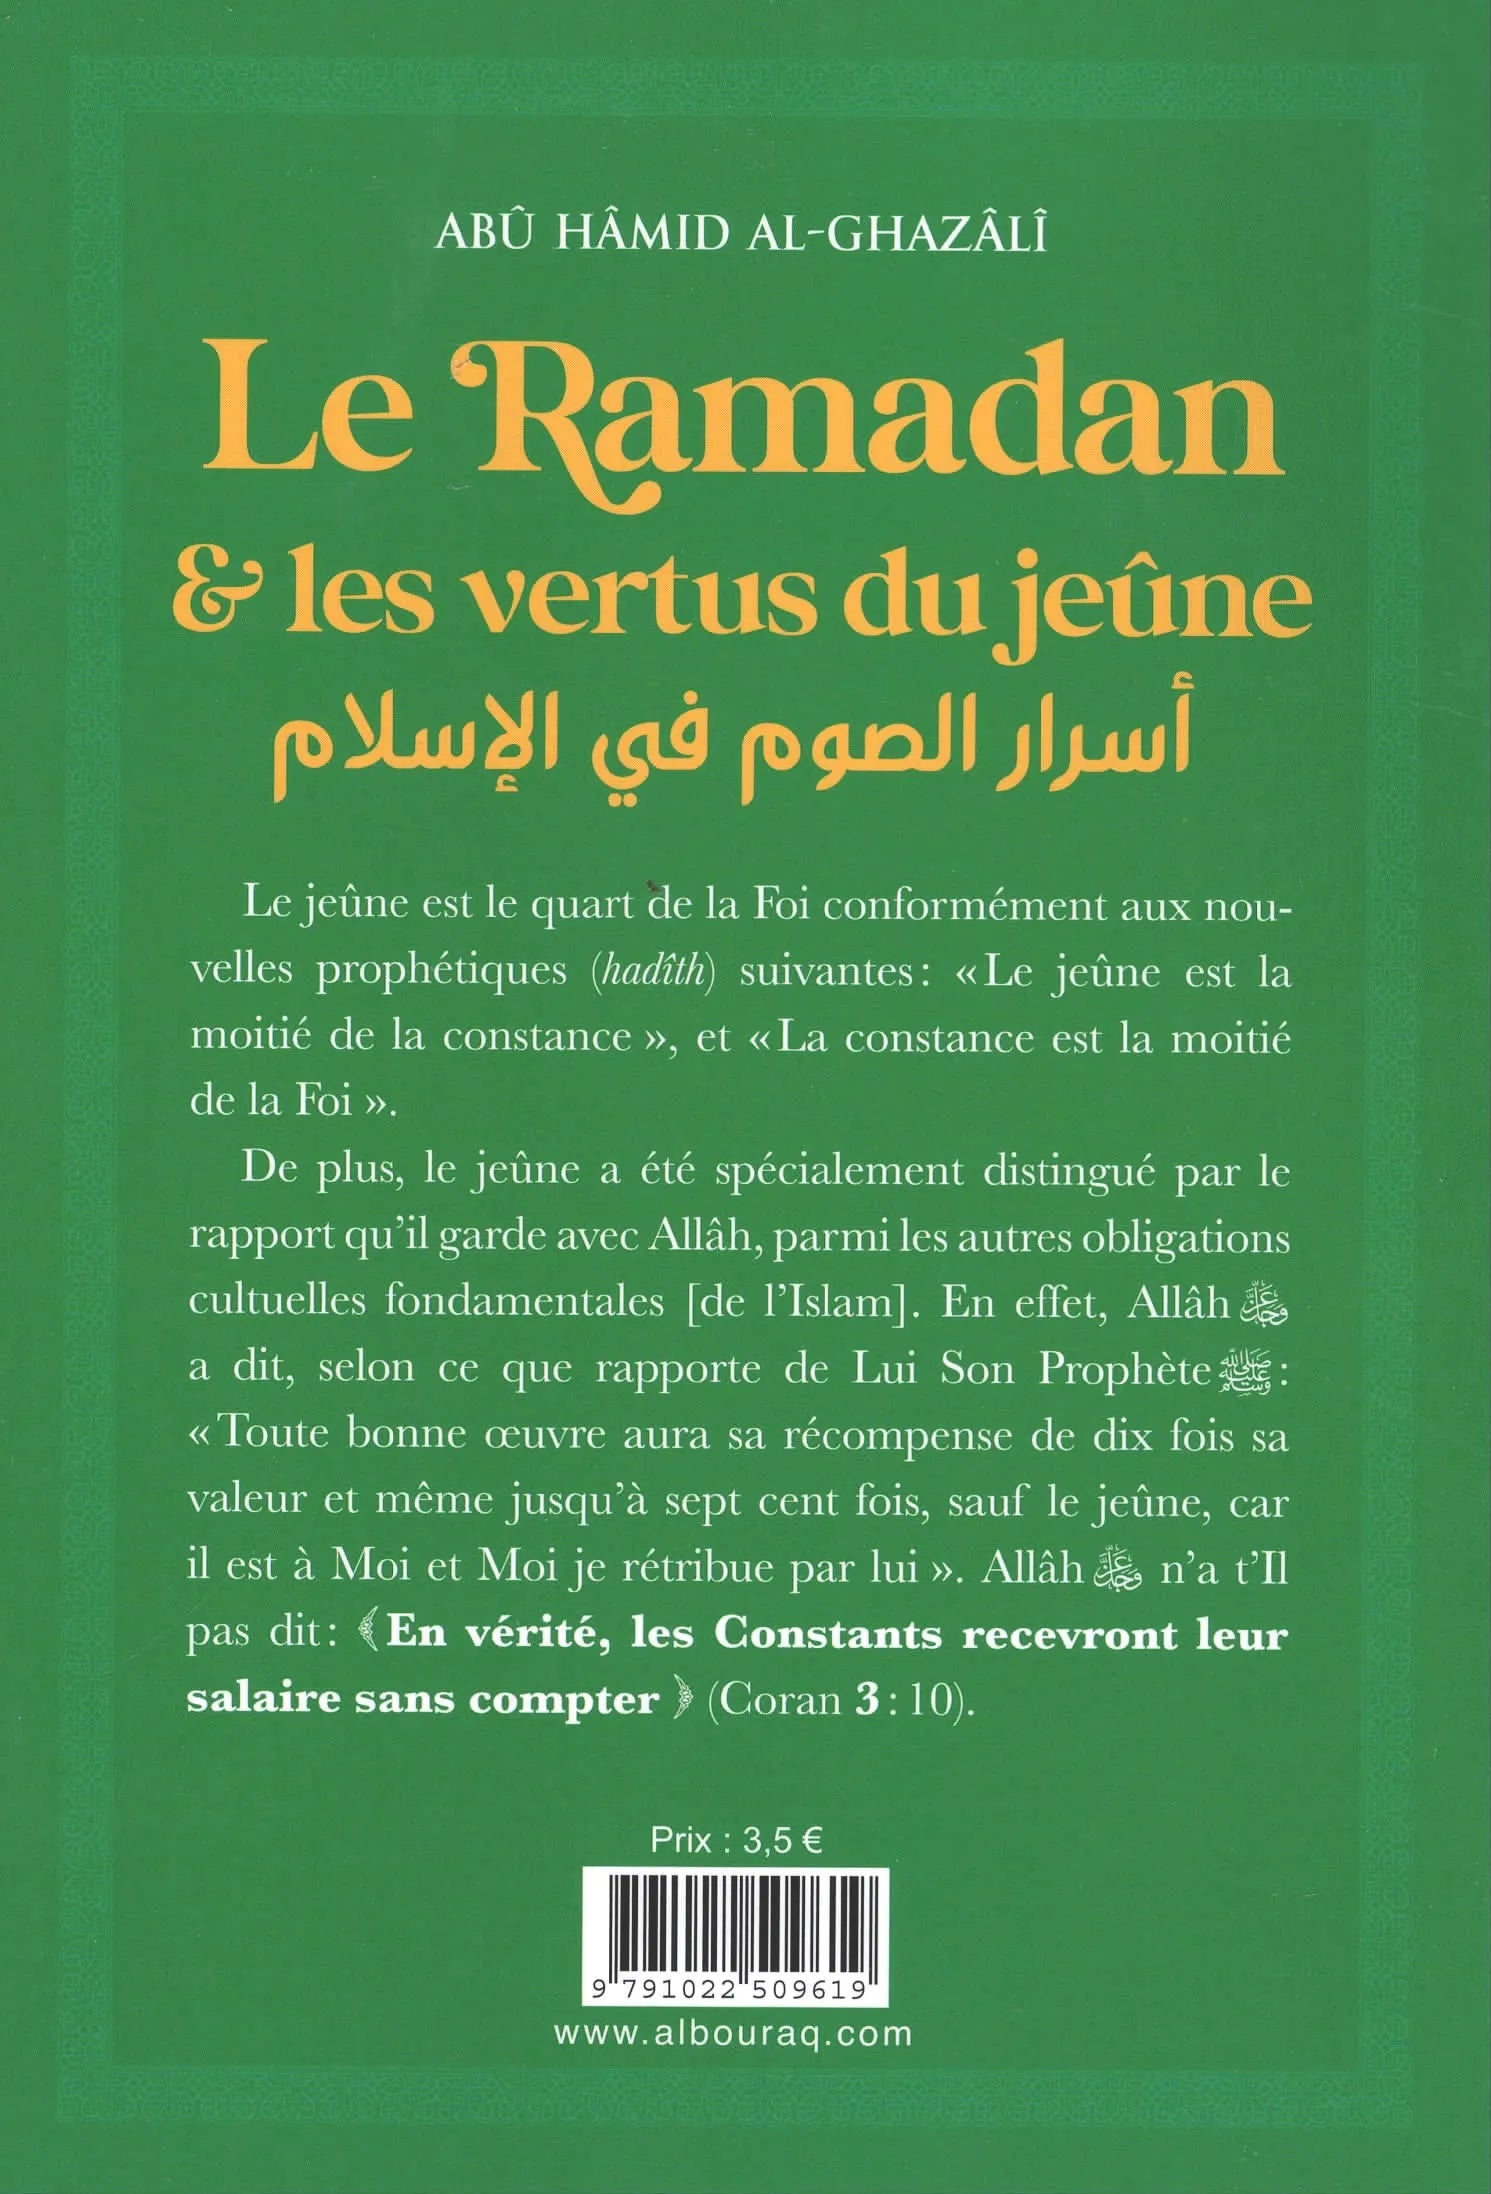 Le Ramadan & les vertus du jeûne par Abu Hamid Al-Ghazali Vert Verso - Albouraq